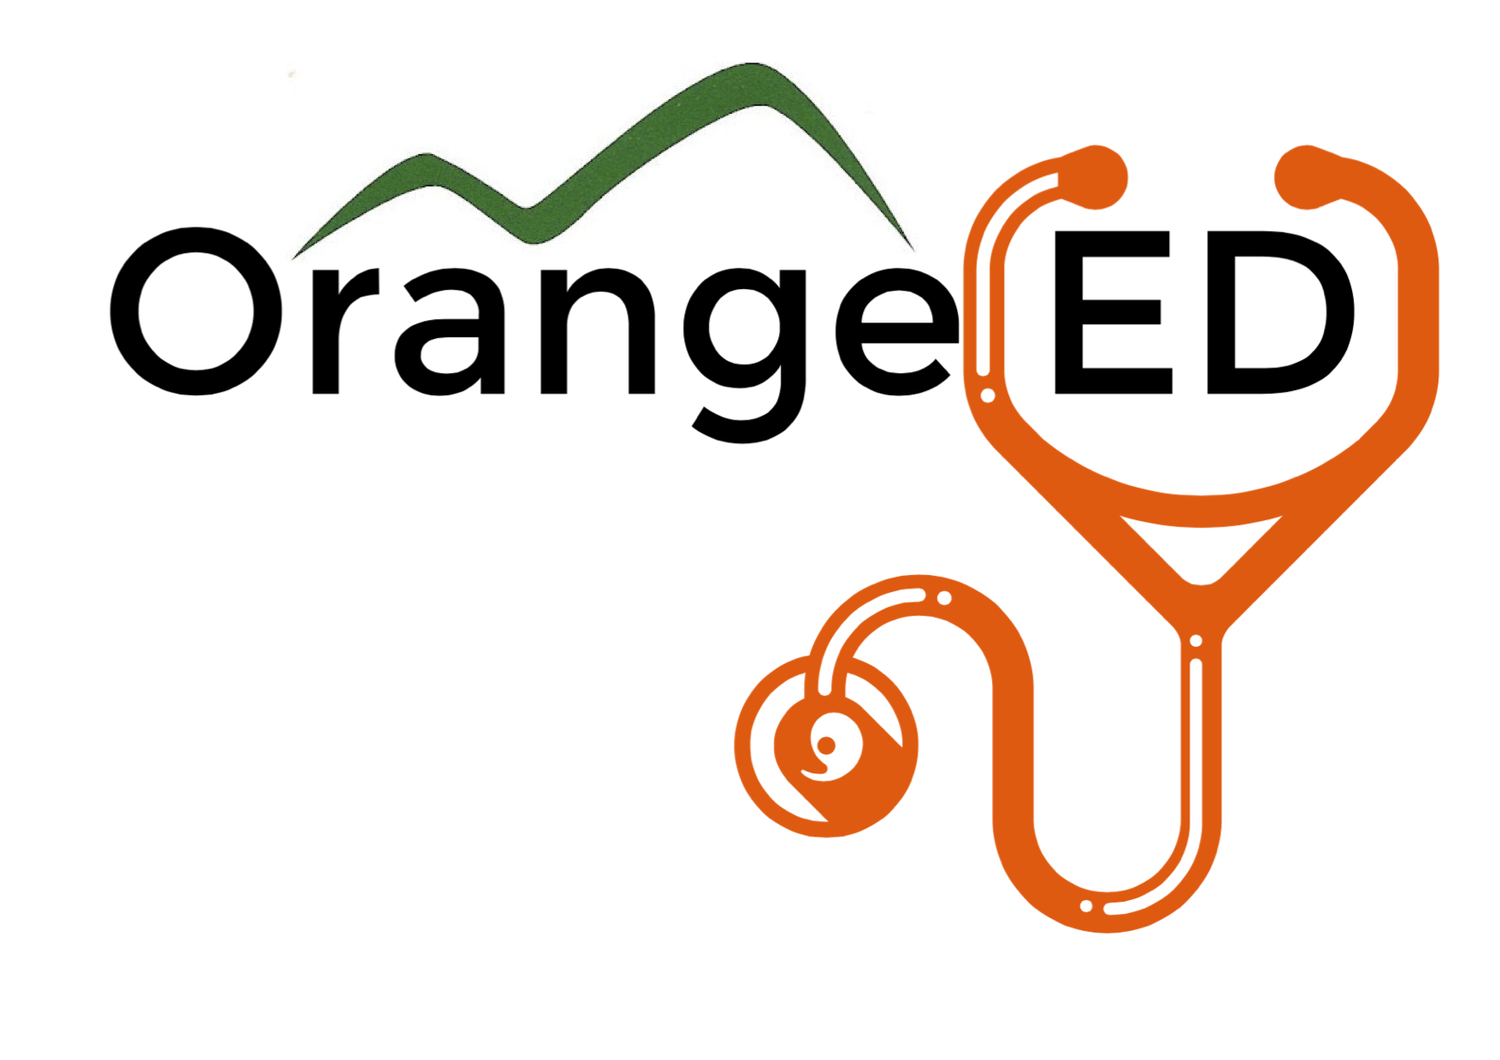 Orange Health Service Emergency Department